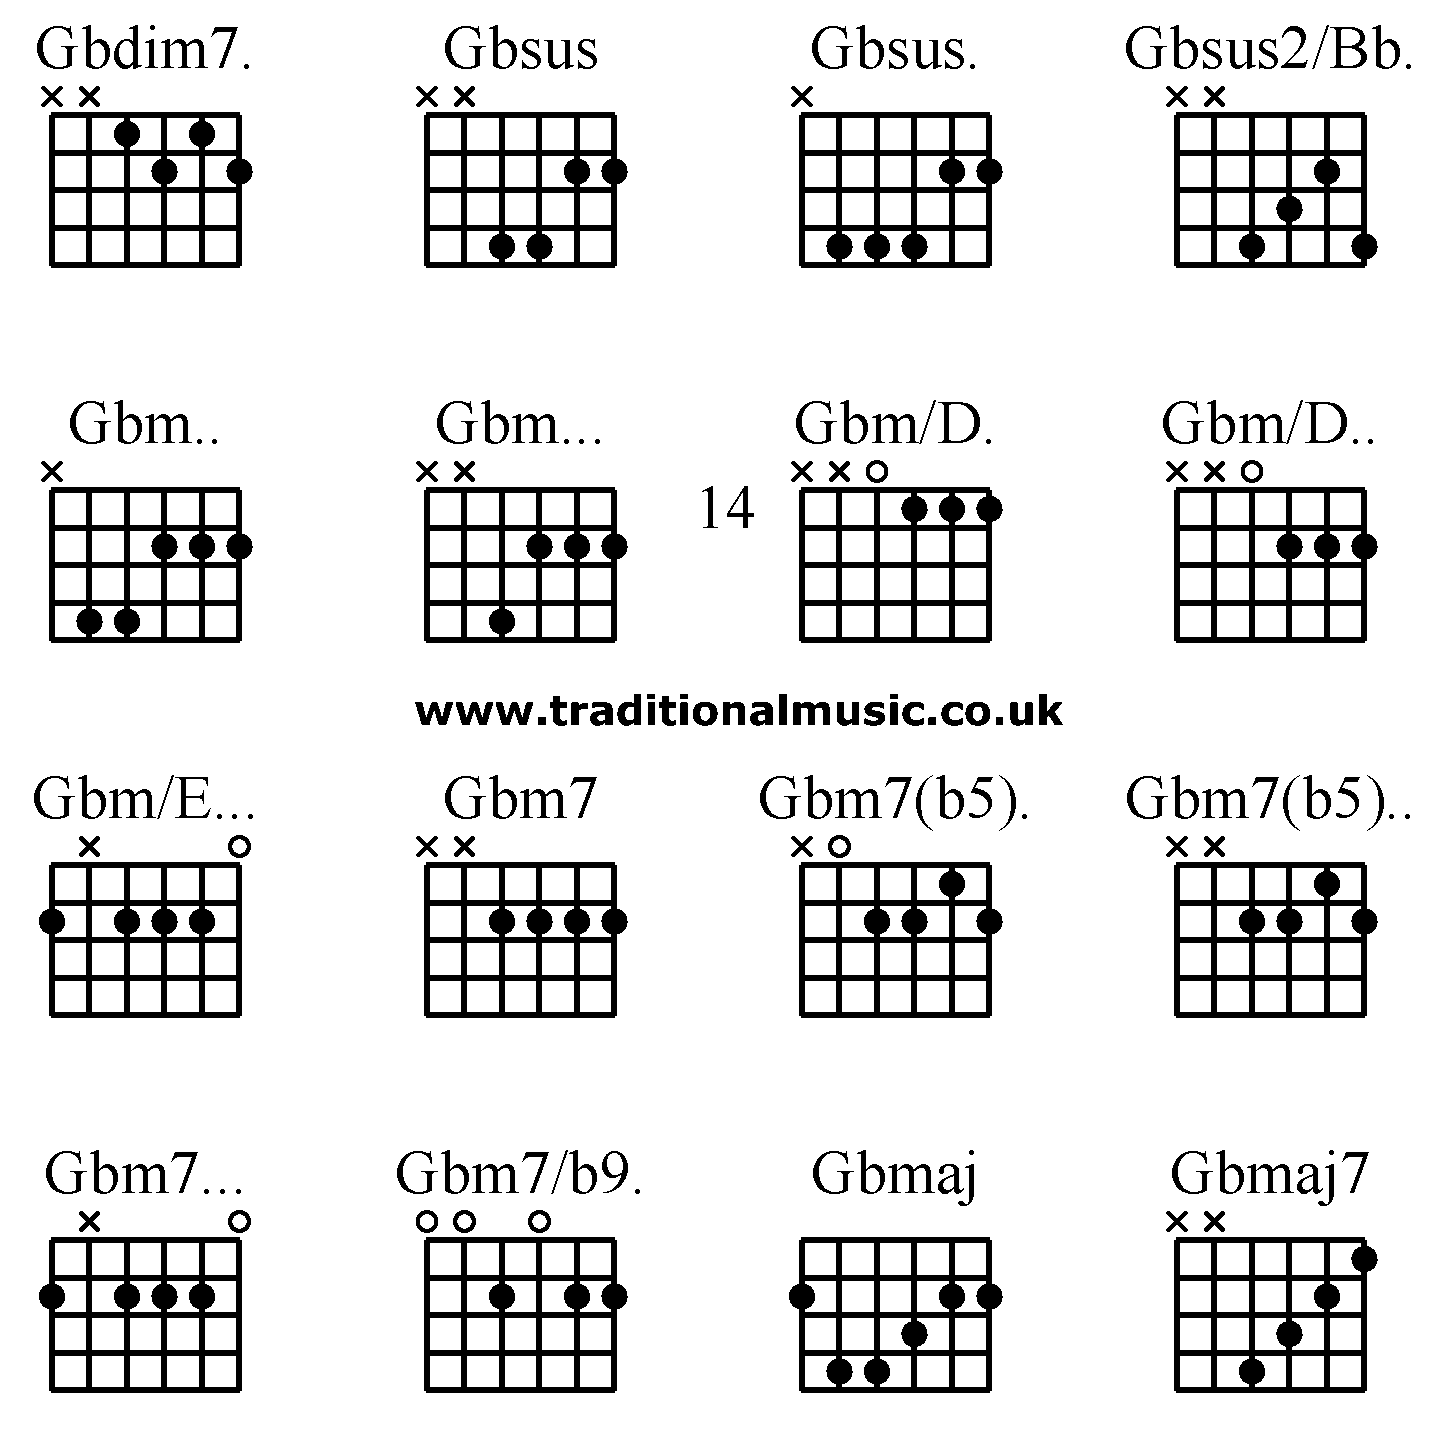 Advanced guitar chords: Gbdim7. Gbsus Gbsus. Gbsus2/Bb. Gbm.. Gbm... Gbm/D. Gbm/D.. Gbm/E... Gbm7 Gbm7(b5). Gbm7(b5).. Gbm7... Gbm7/b9. Gbmaj Gbmaj7